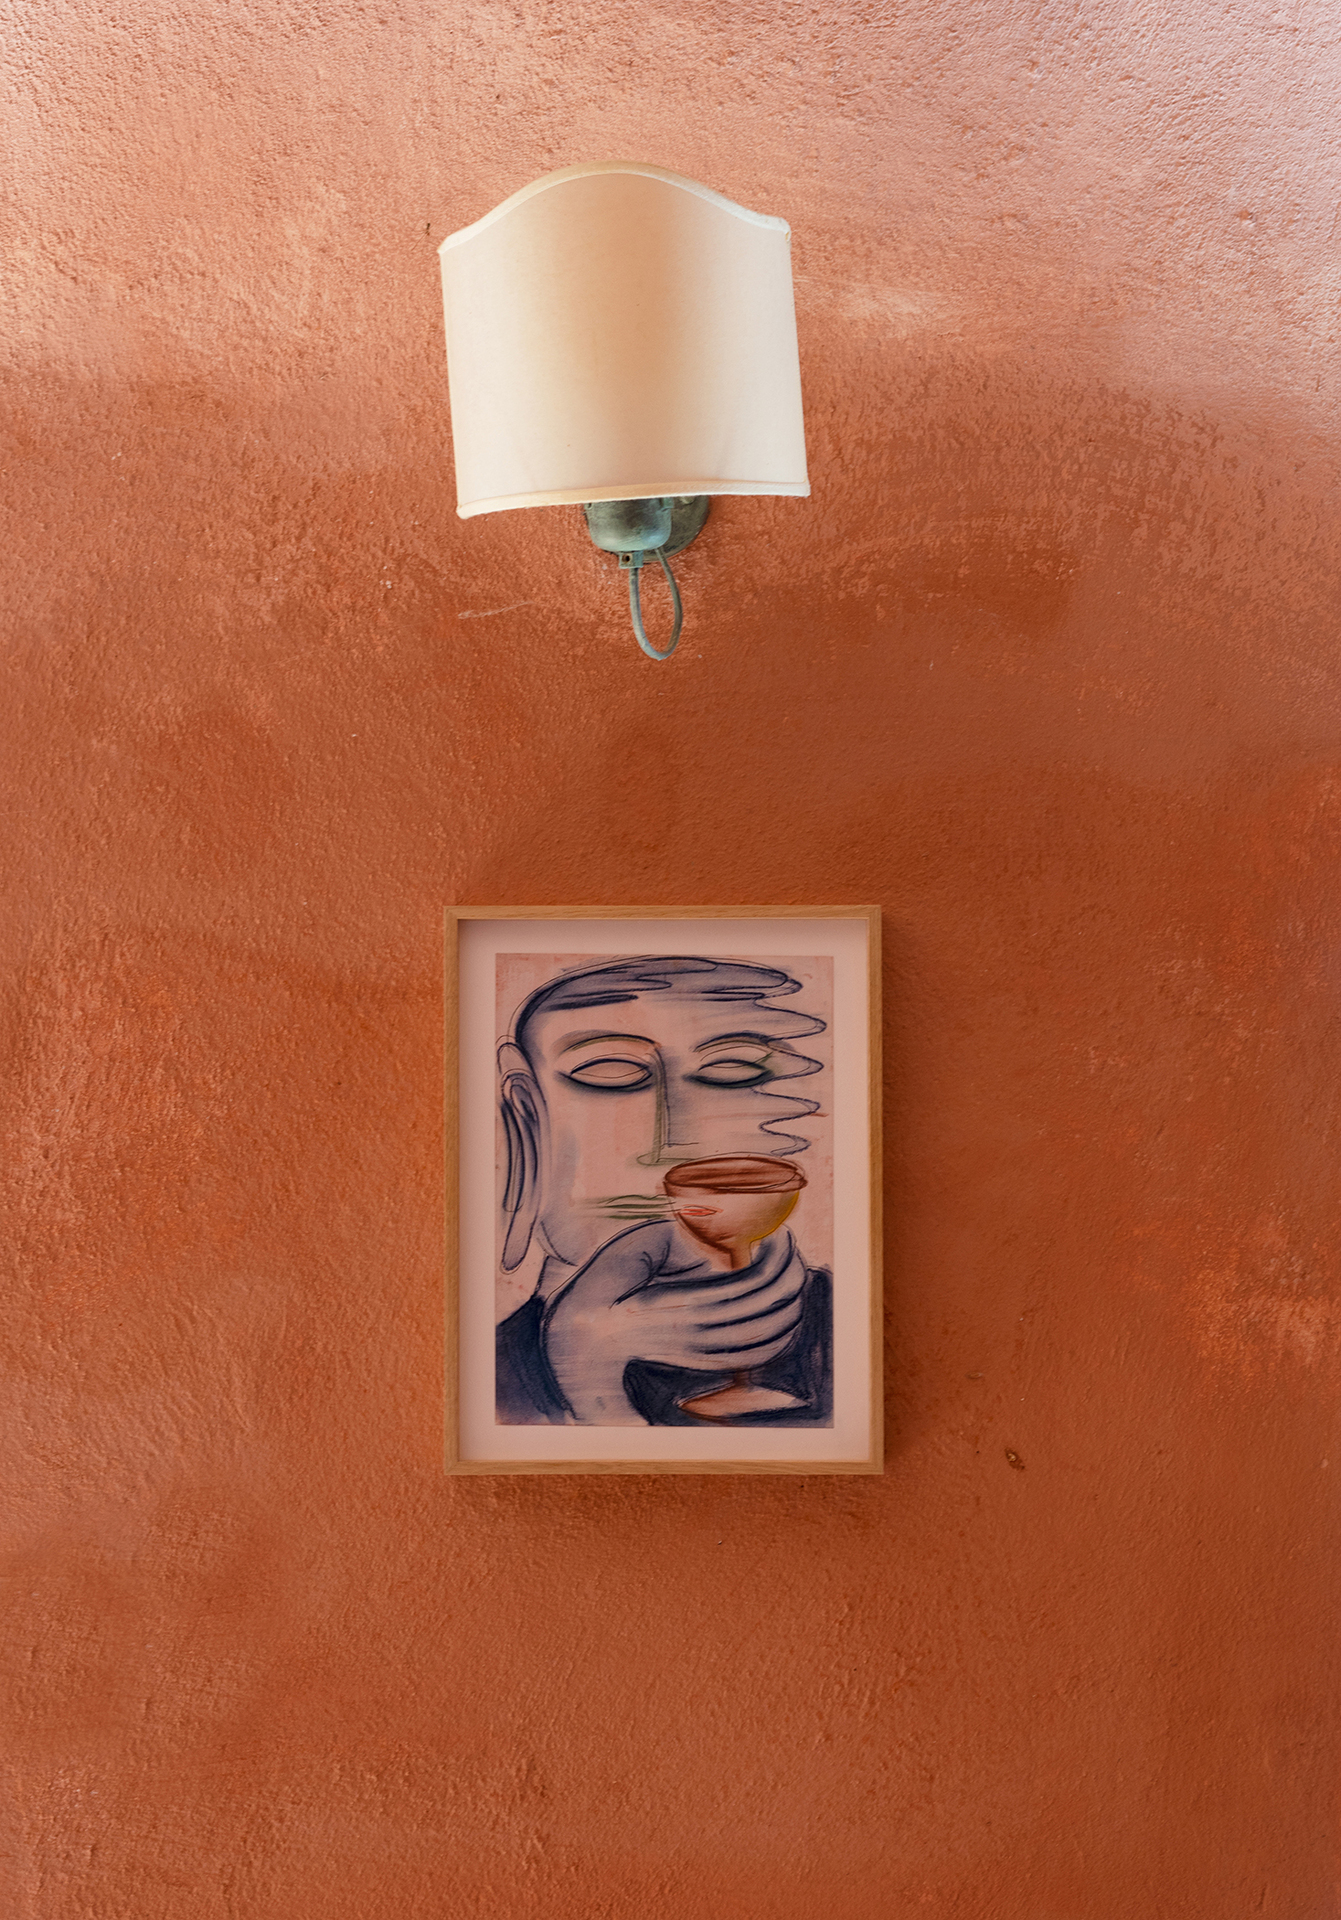 Anastasia Bay, "Only One", 2022 (Pastel on paper, framed, 35 x 27 cm).